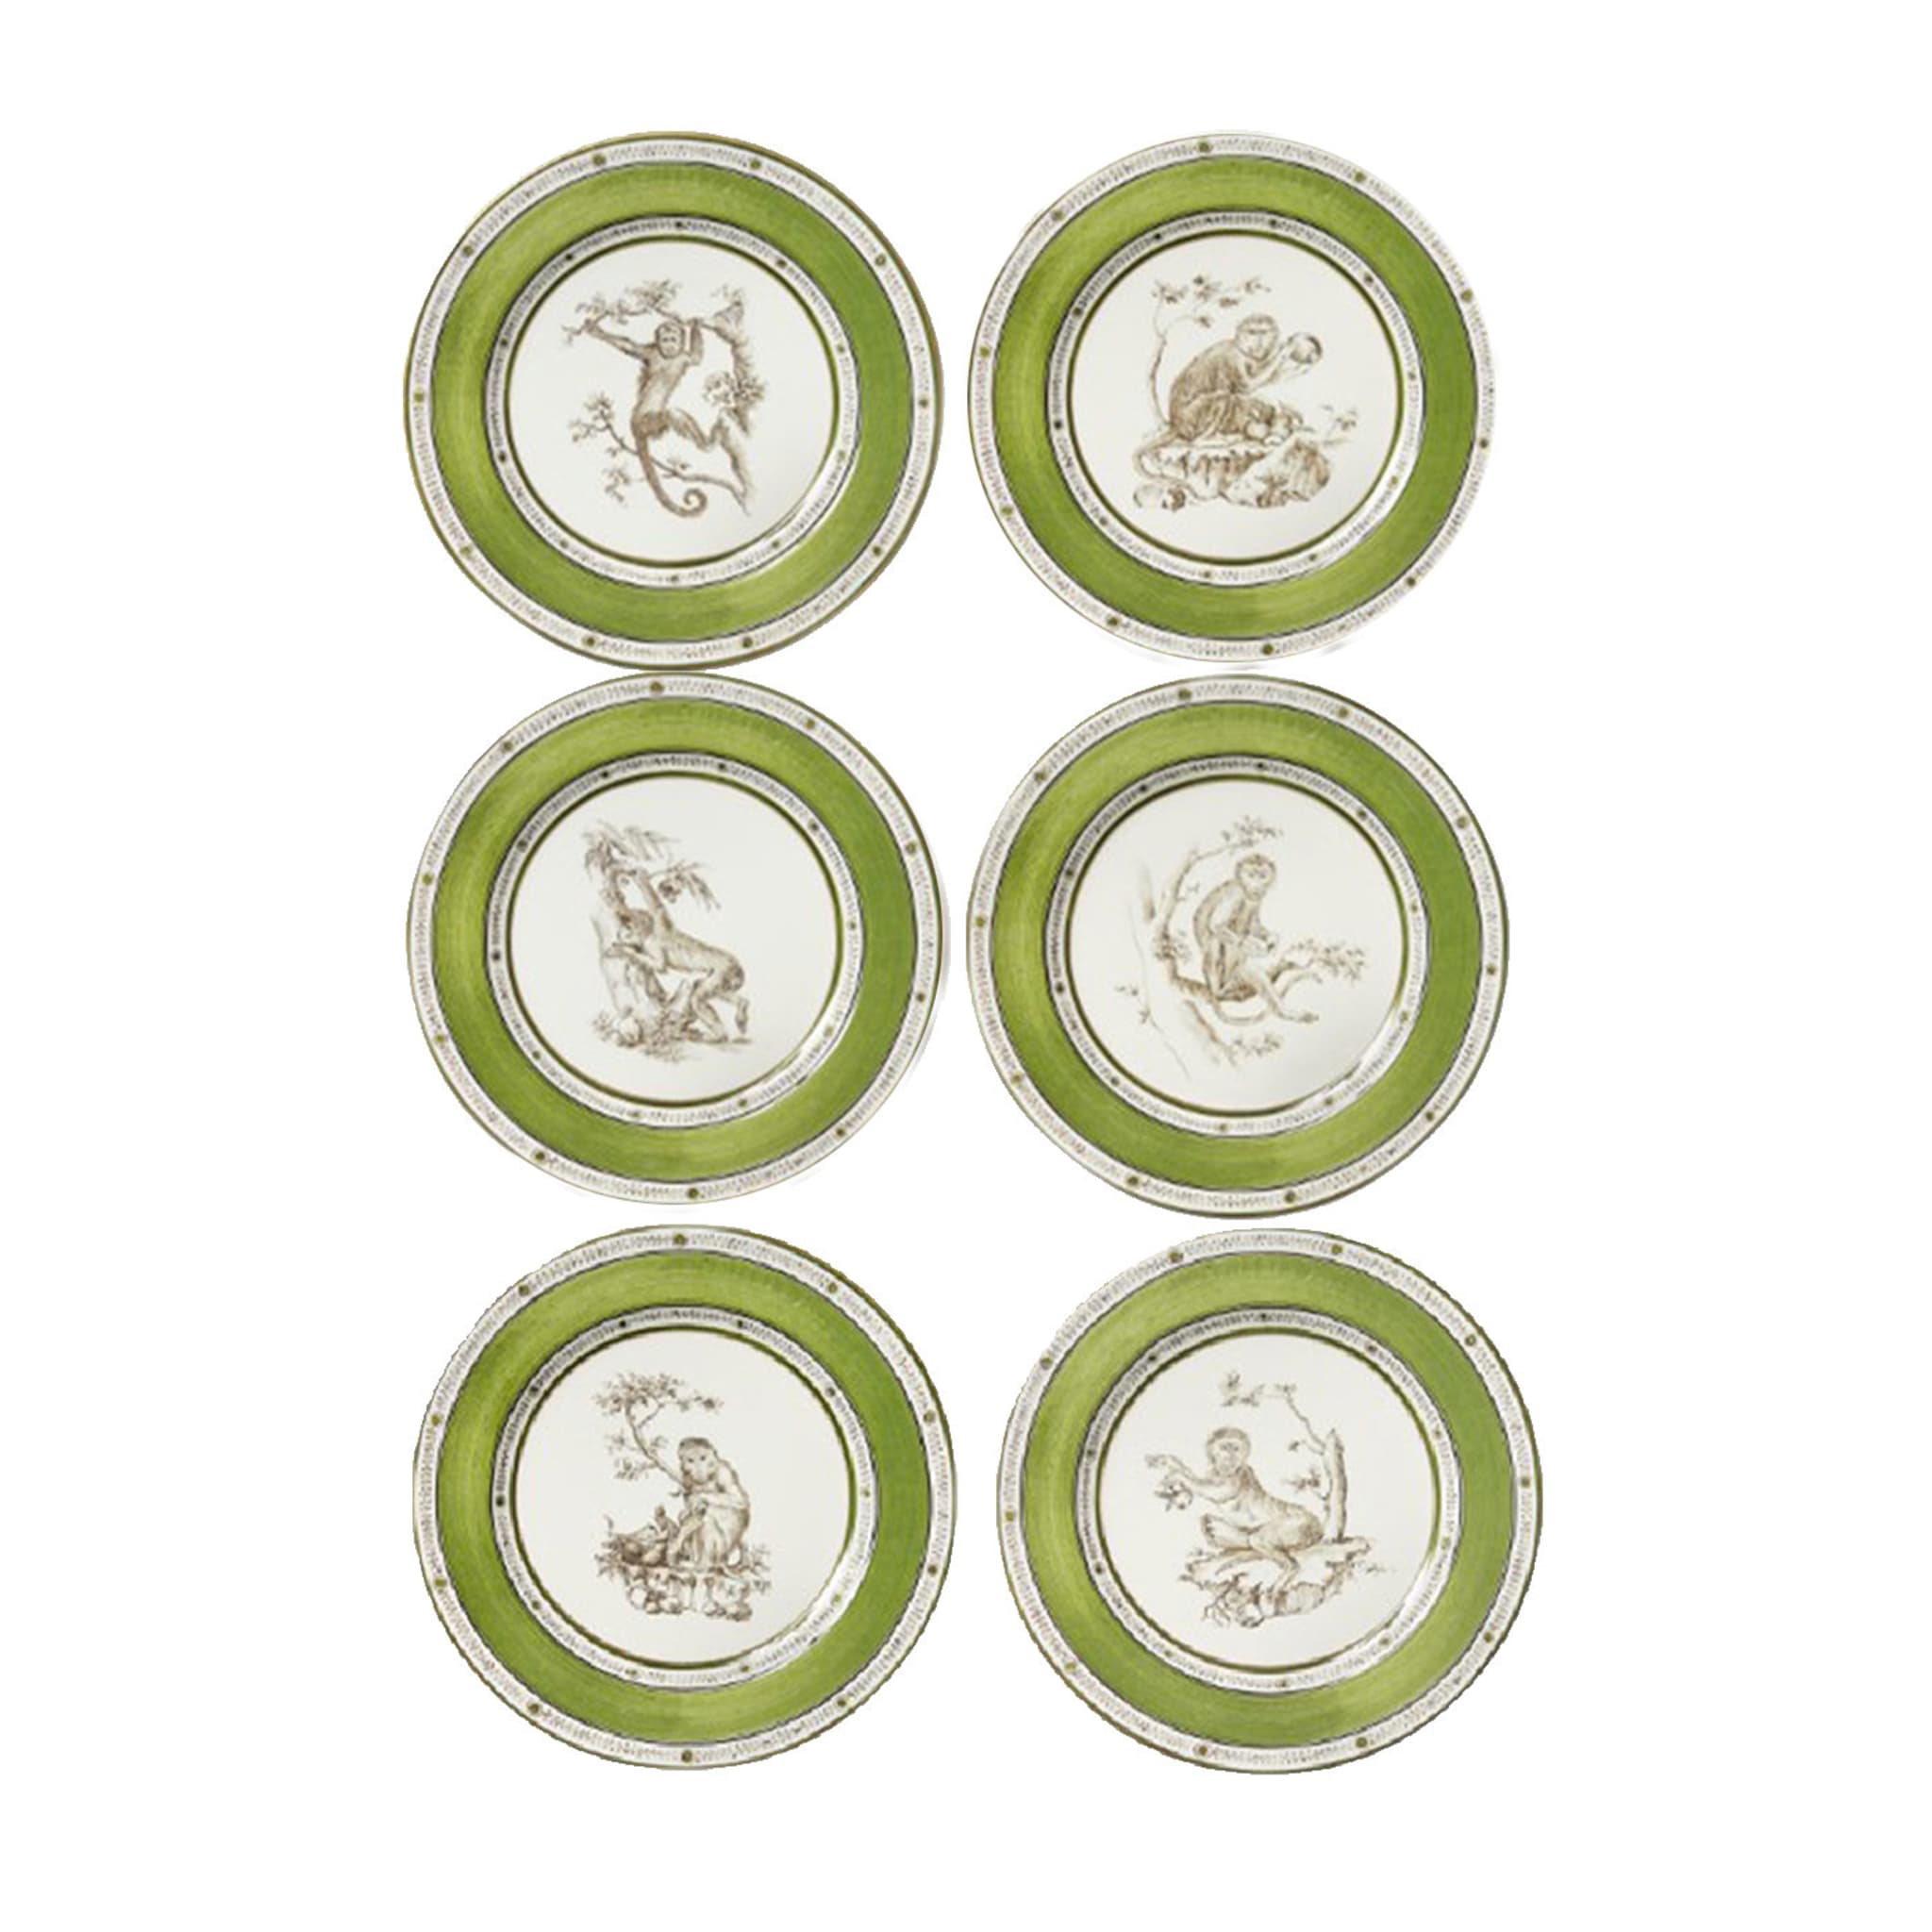 Green Monkeys Set of 6 Dinner Plates #1 - Main view